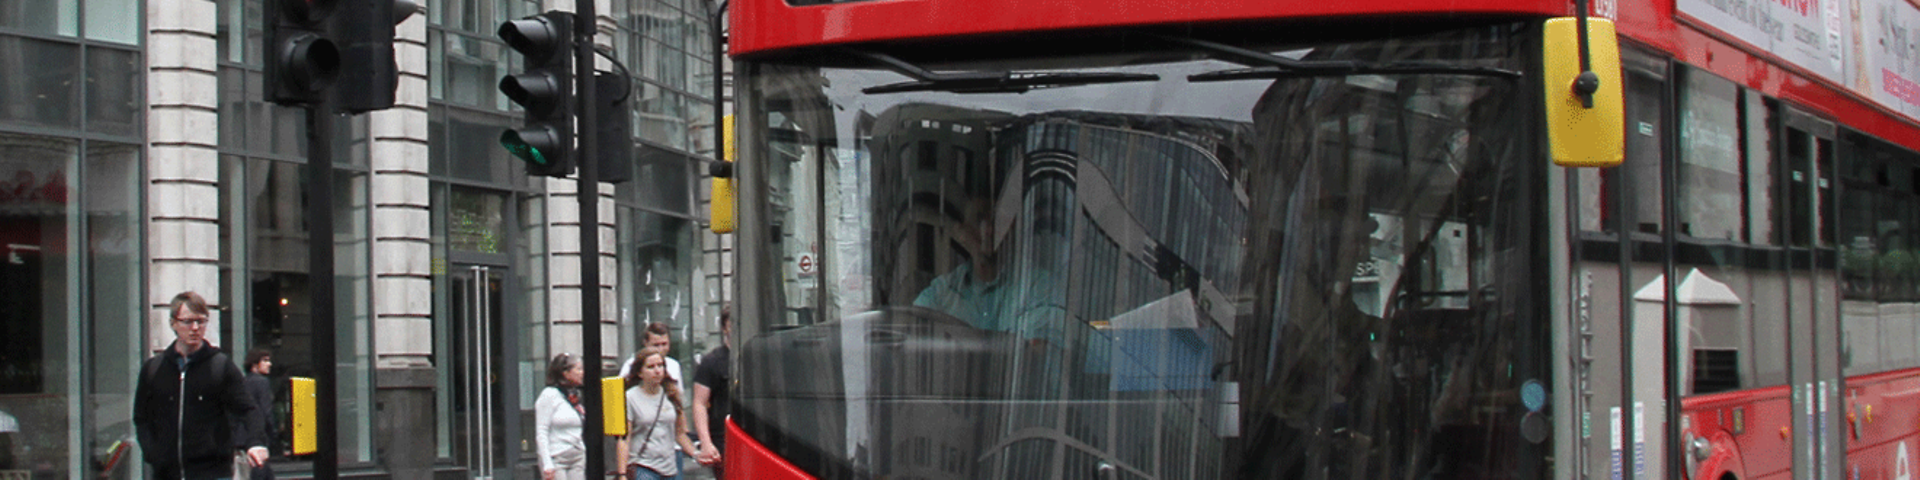 ARR23_londonbus_bus2